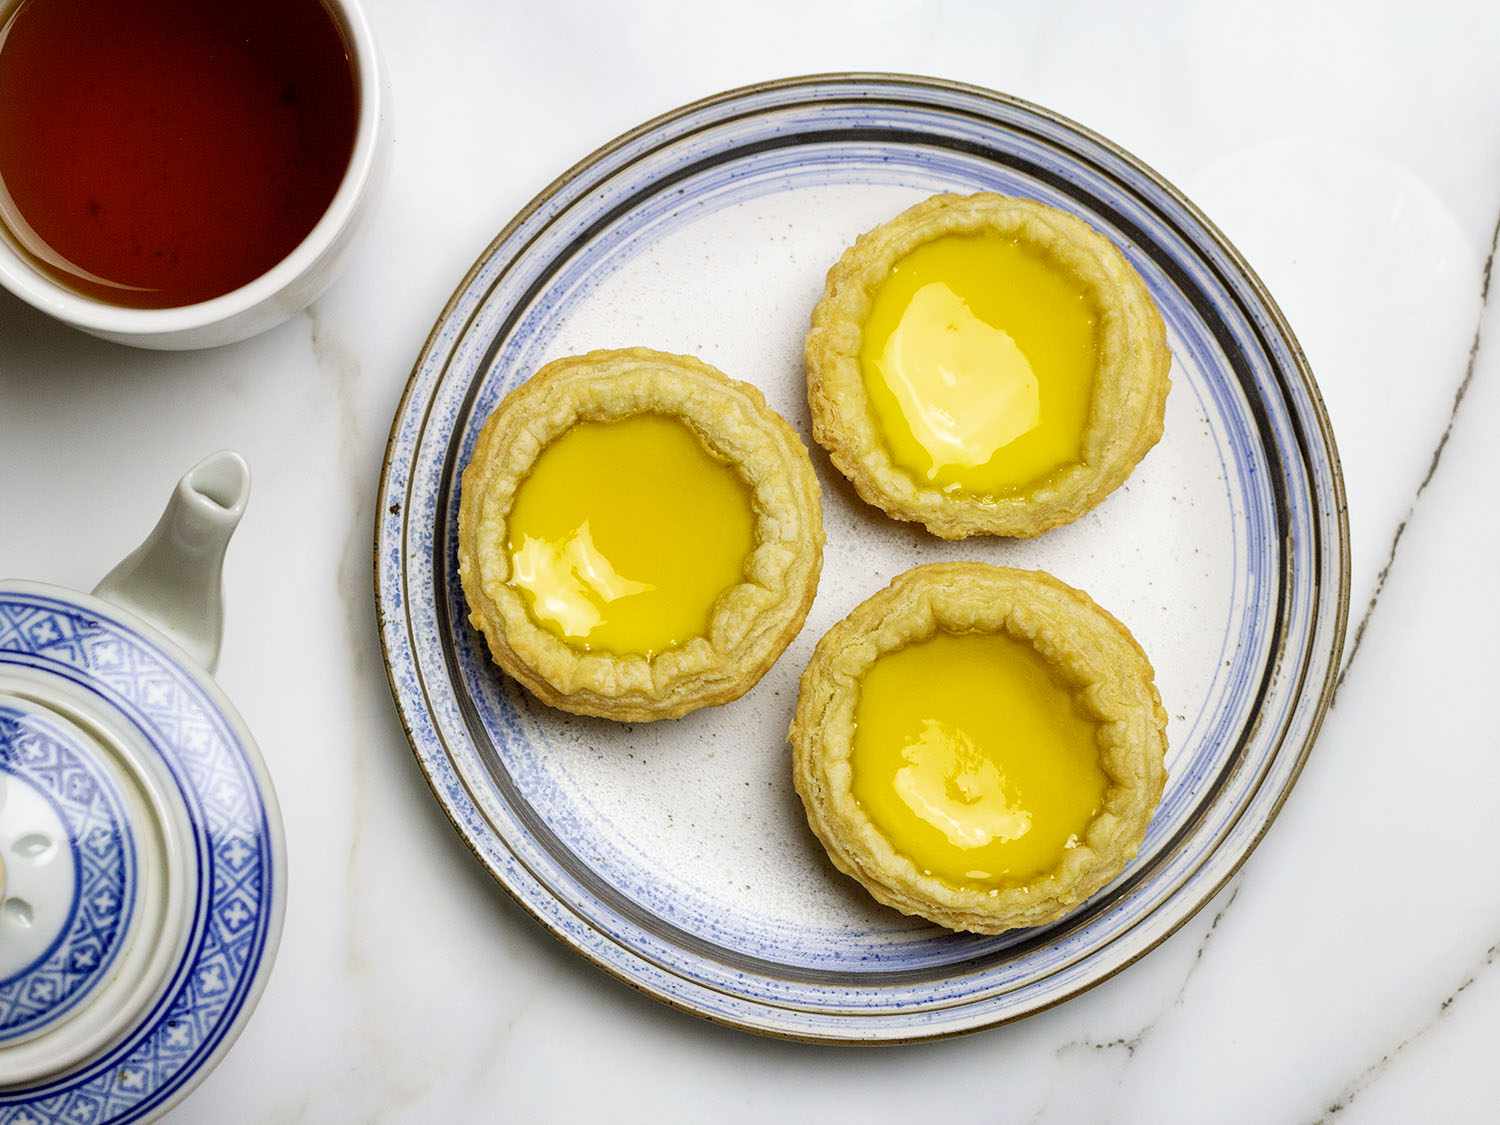 Three Hong Kong egg custard tarts on a plate net to a cup of tea and a tea pot.